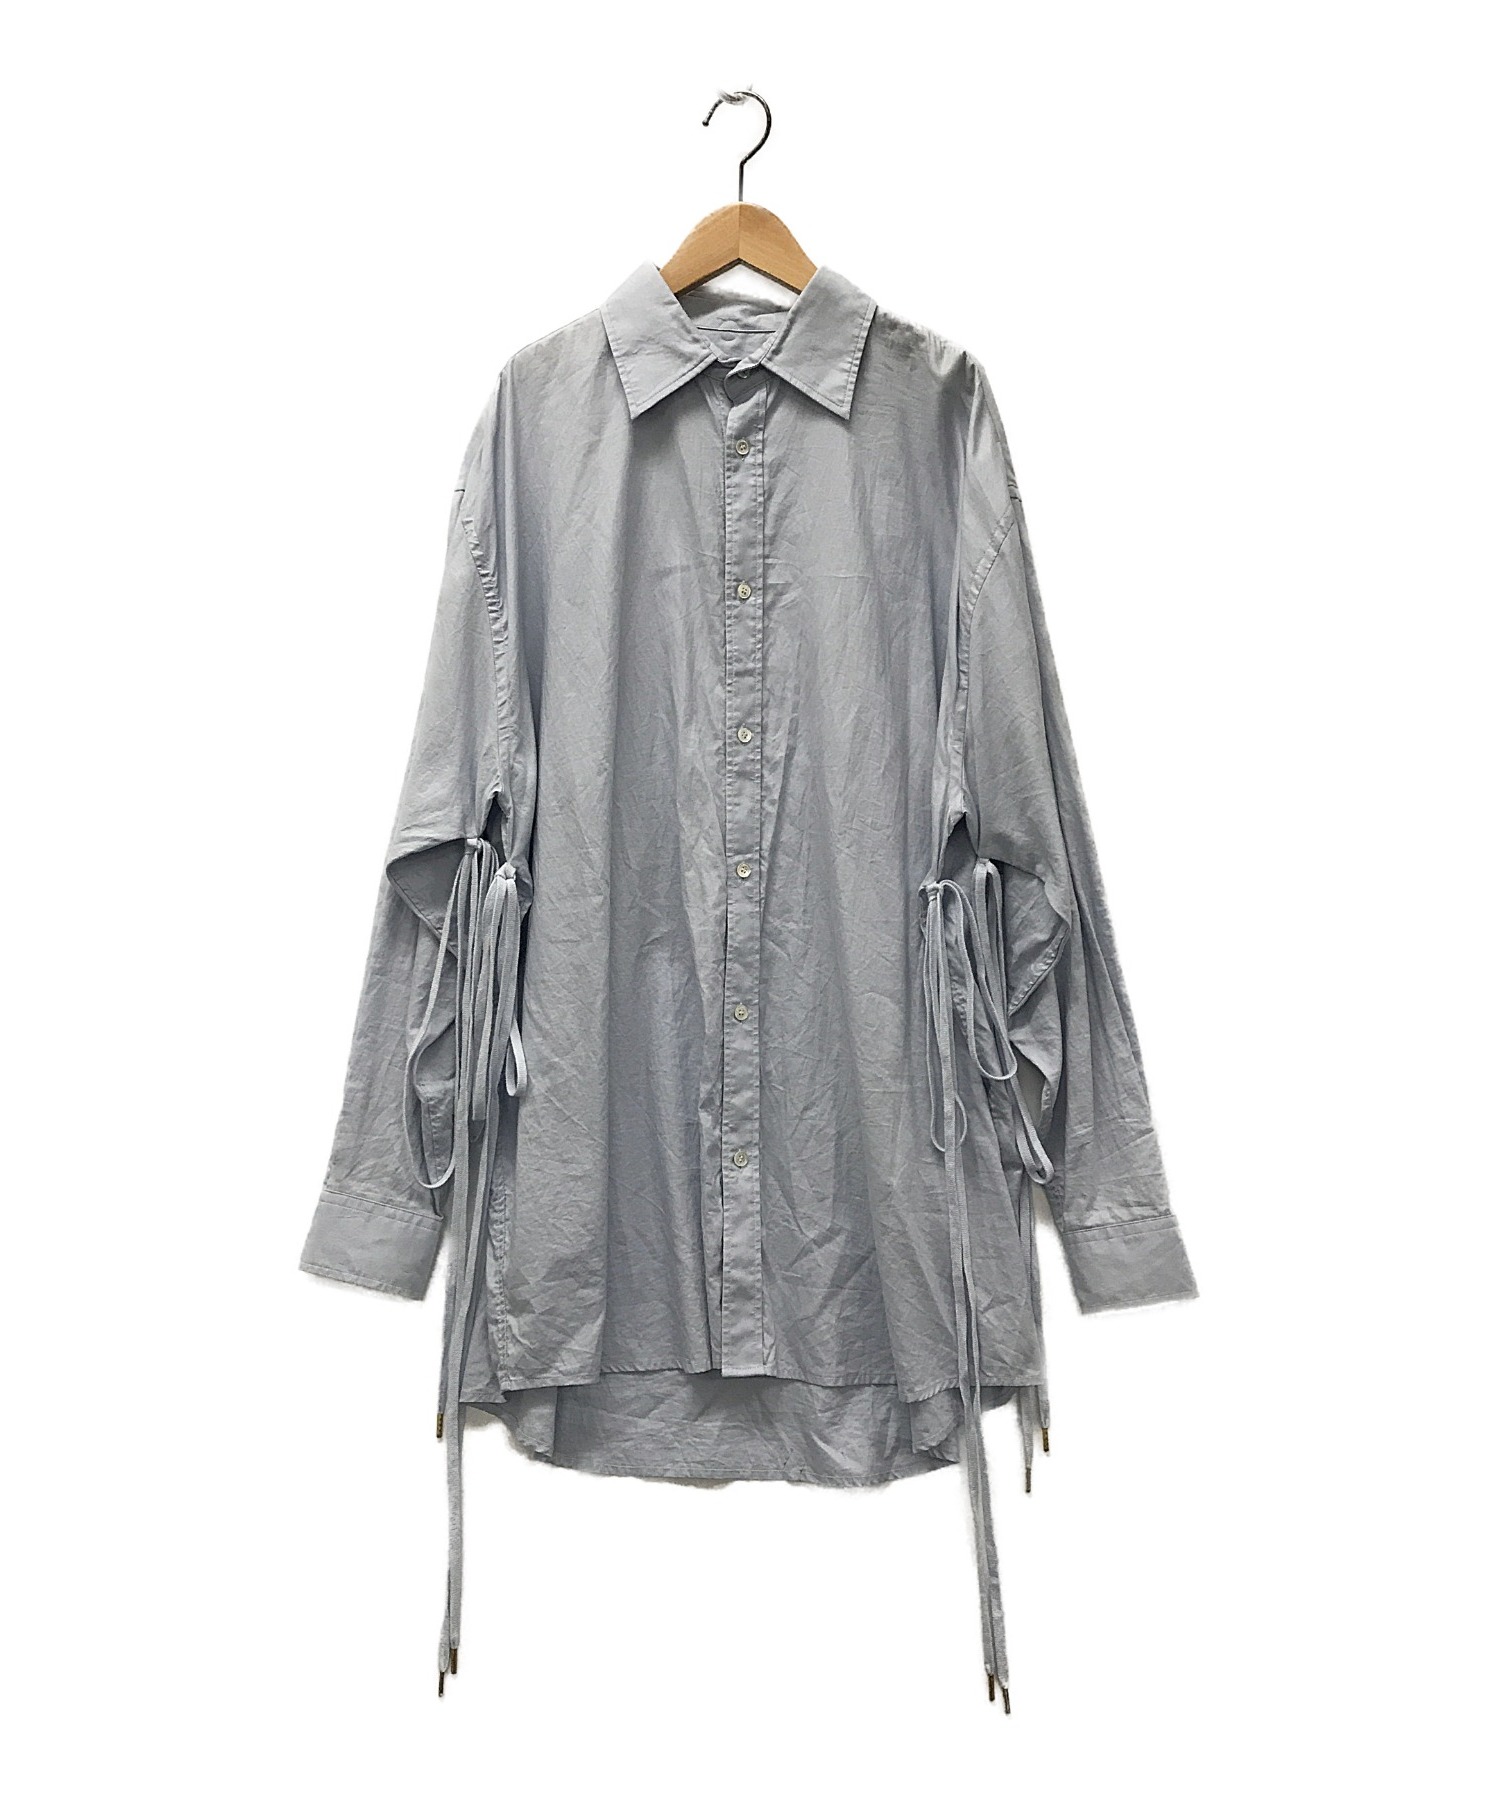 DRESSEDUNDRESSED (ドレスドアンドレスド) オーバーサイズシャツ サックスブルー サイズ:2 Tied Oversized Shirt  DUW19108